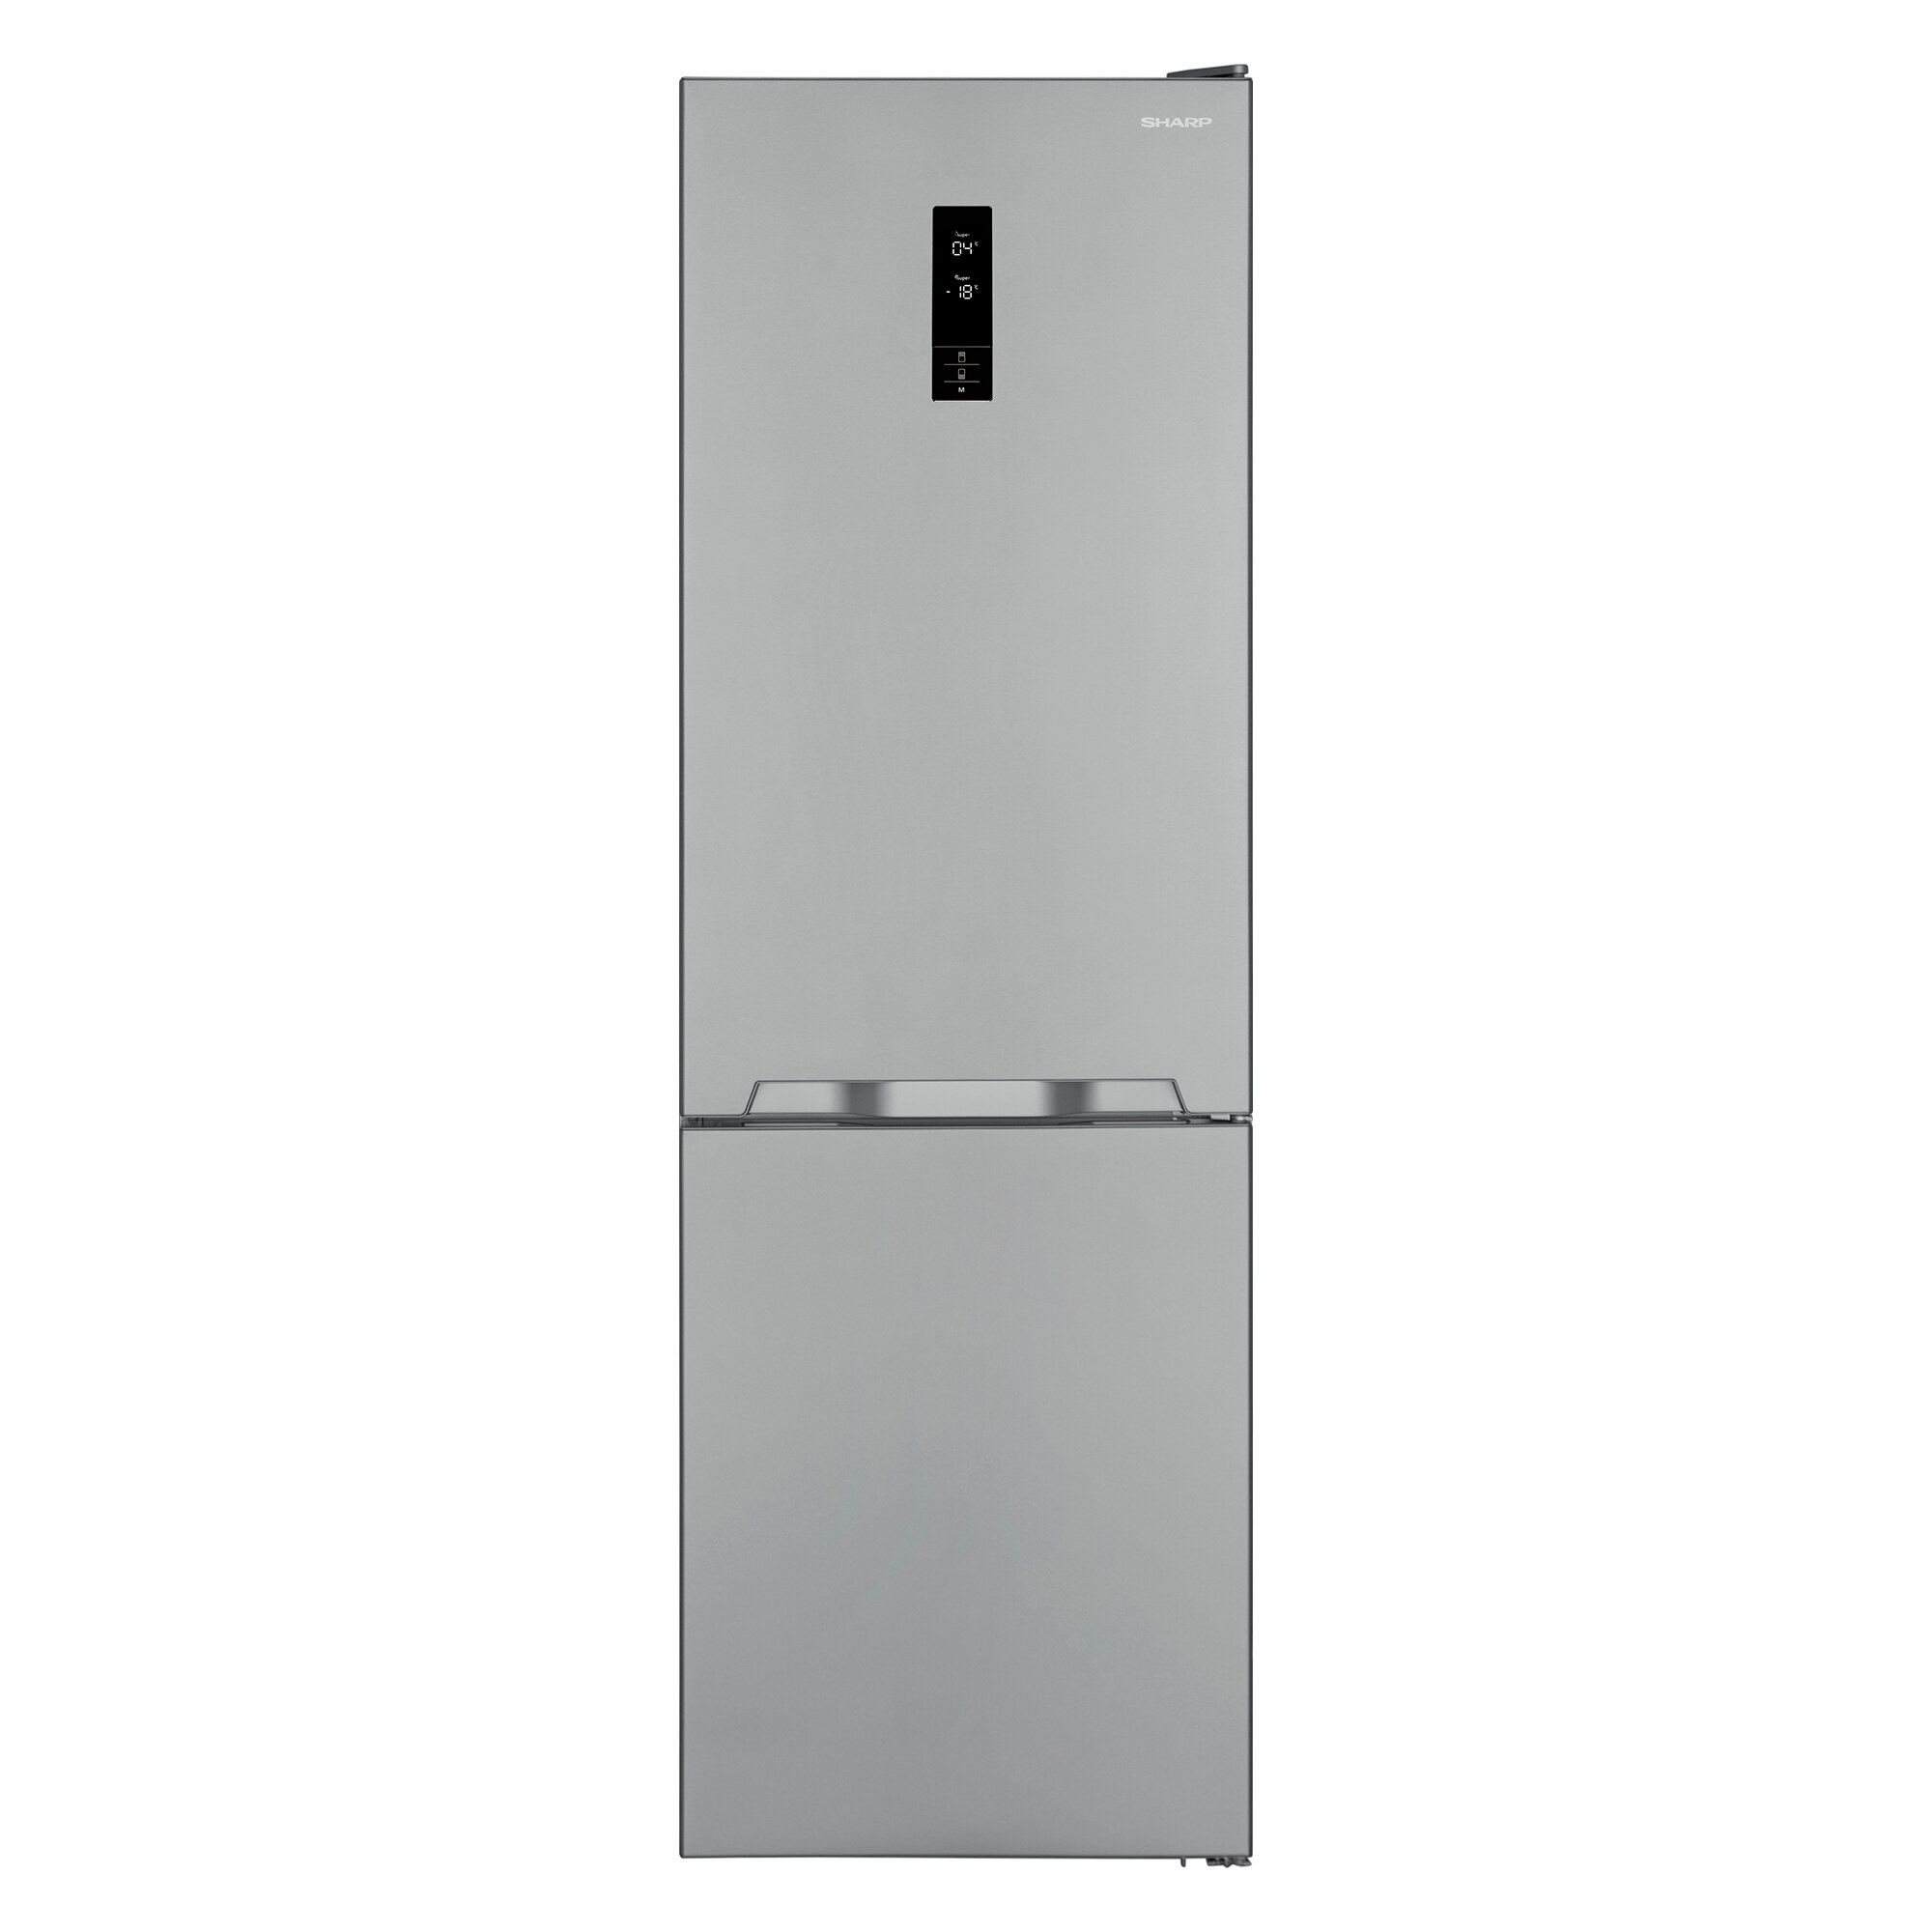 Хладилник Sharp SJ-BA10-IEXI1 с обем от 324 л.